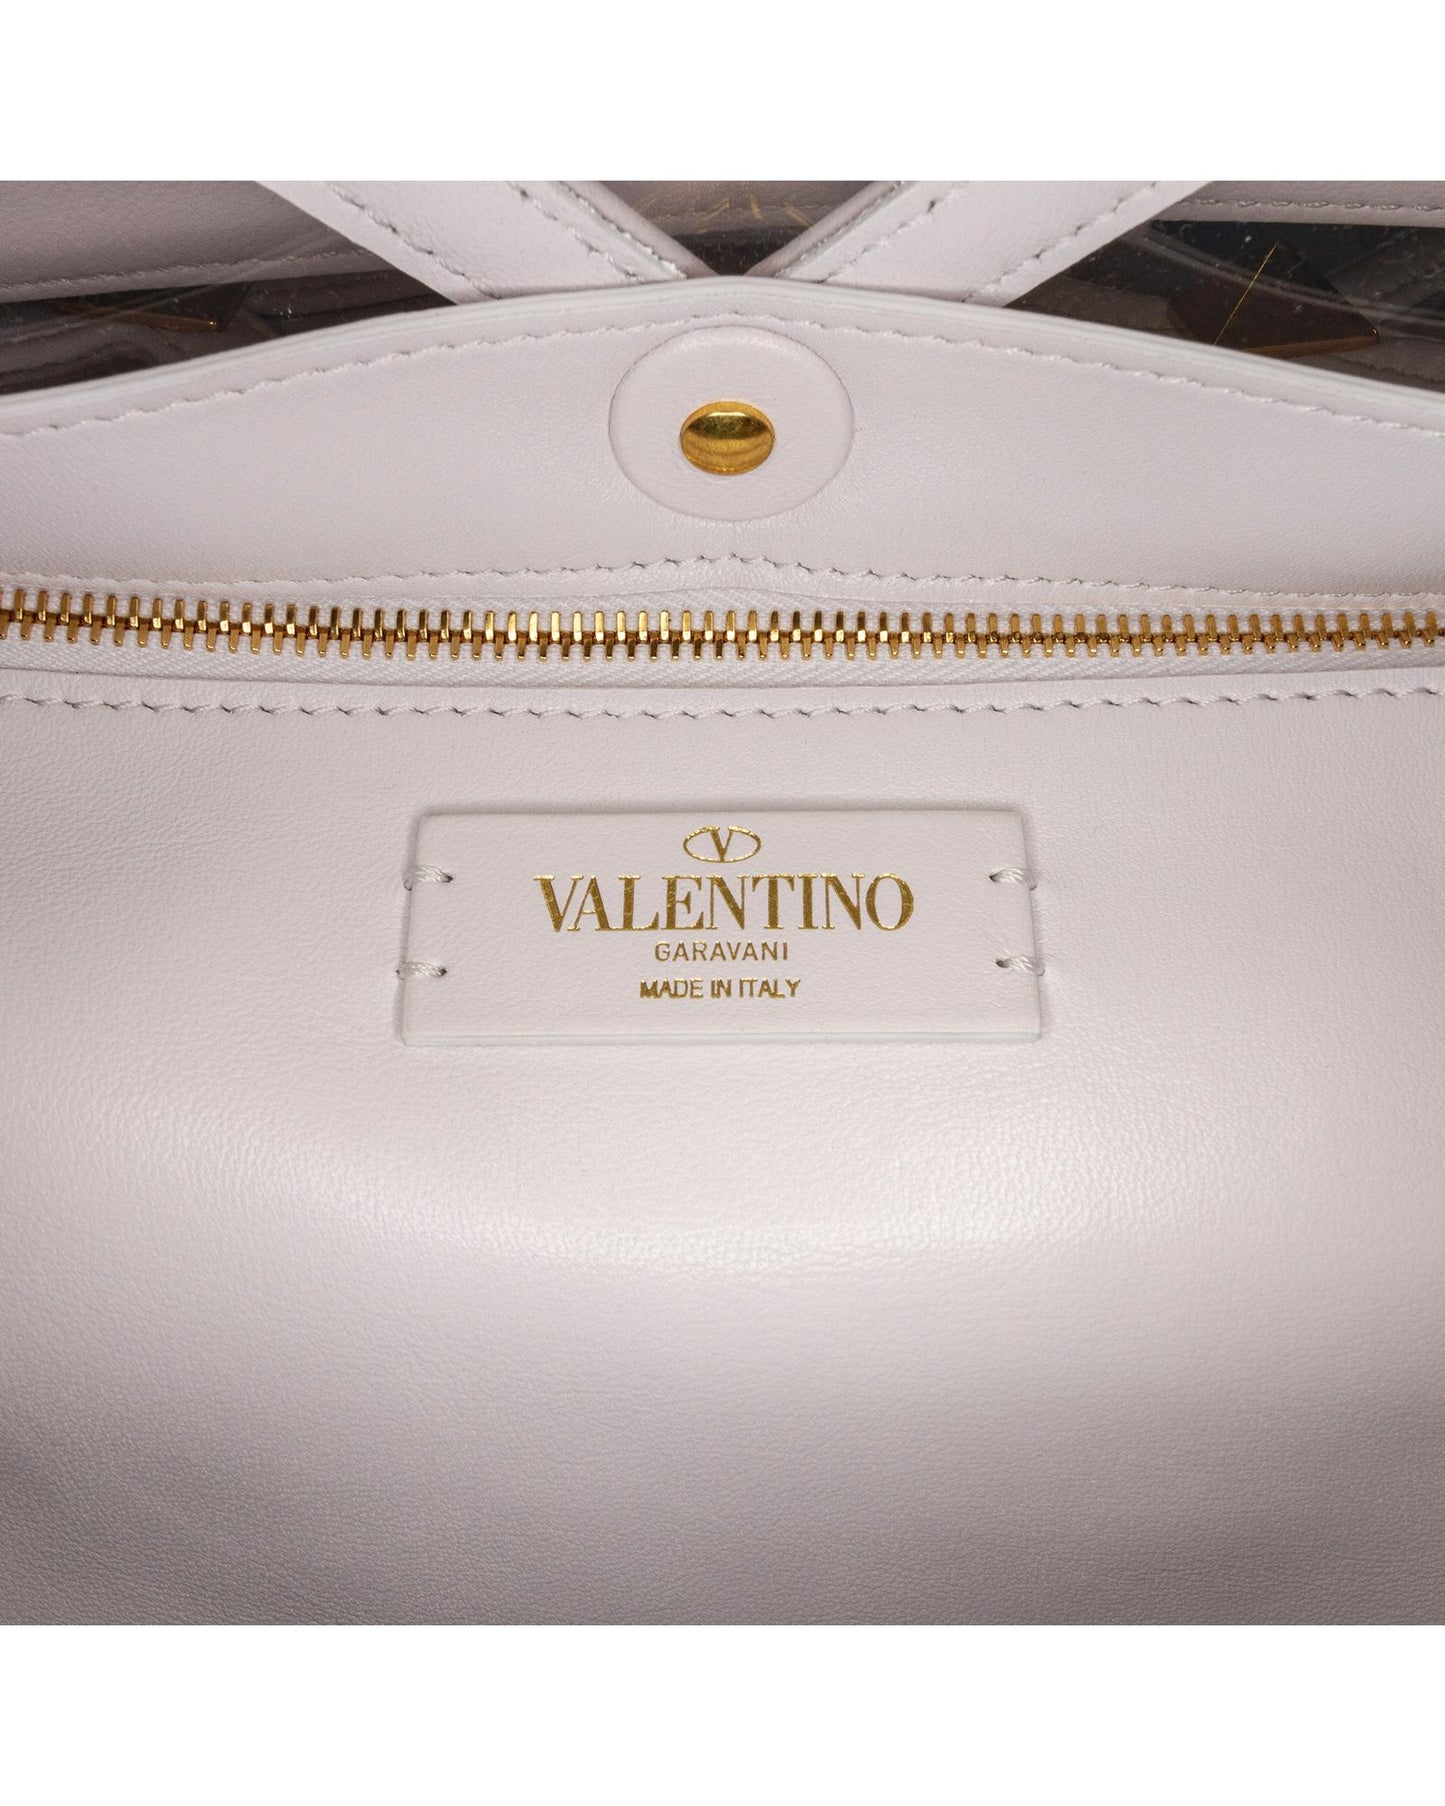 Valentino Women's Studded PVC Flap Bag in White